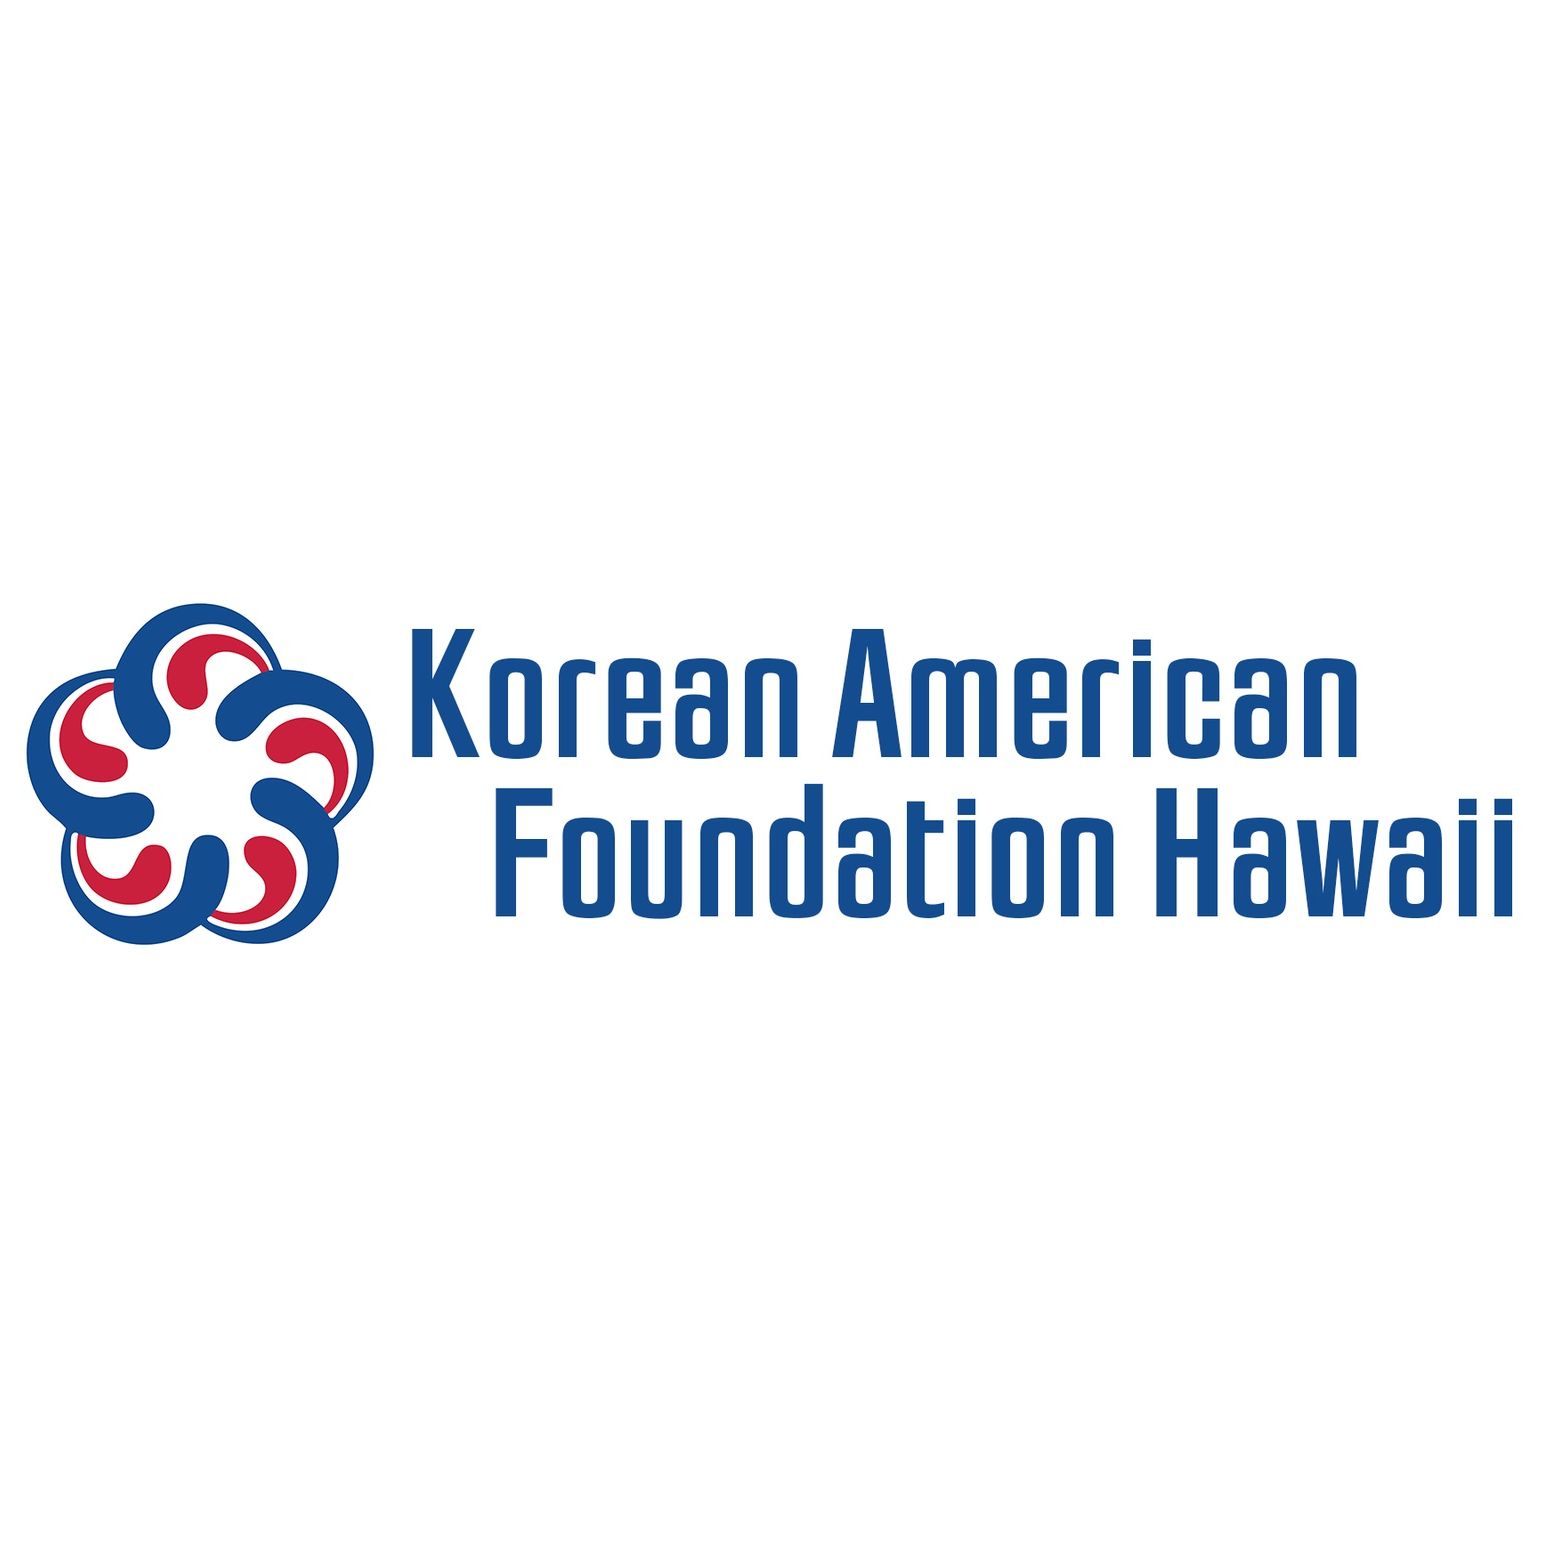 Korean Organization in Honolulu Hawaii - Korean American Foundation Hawaii